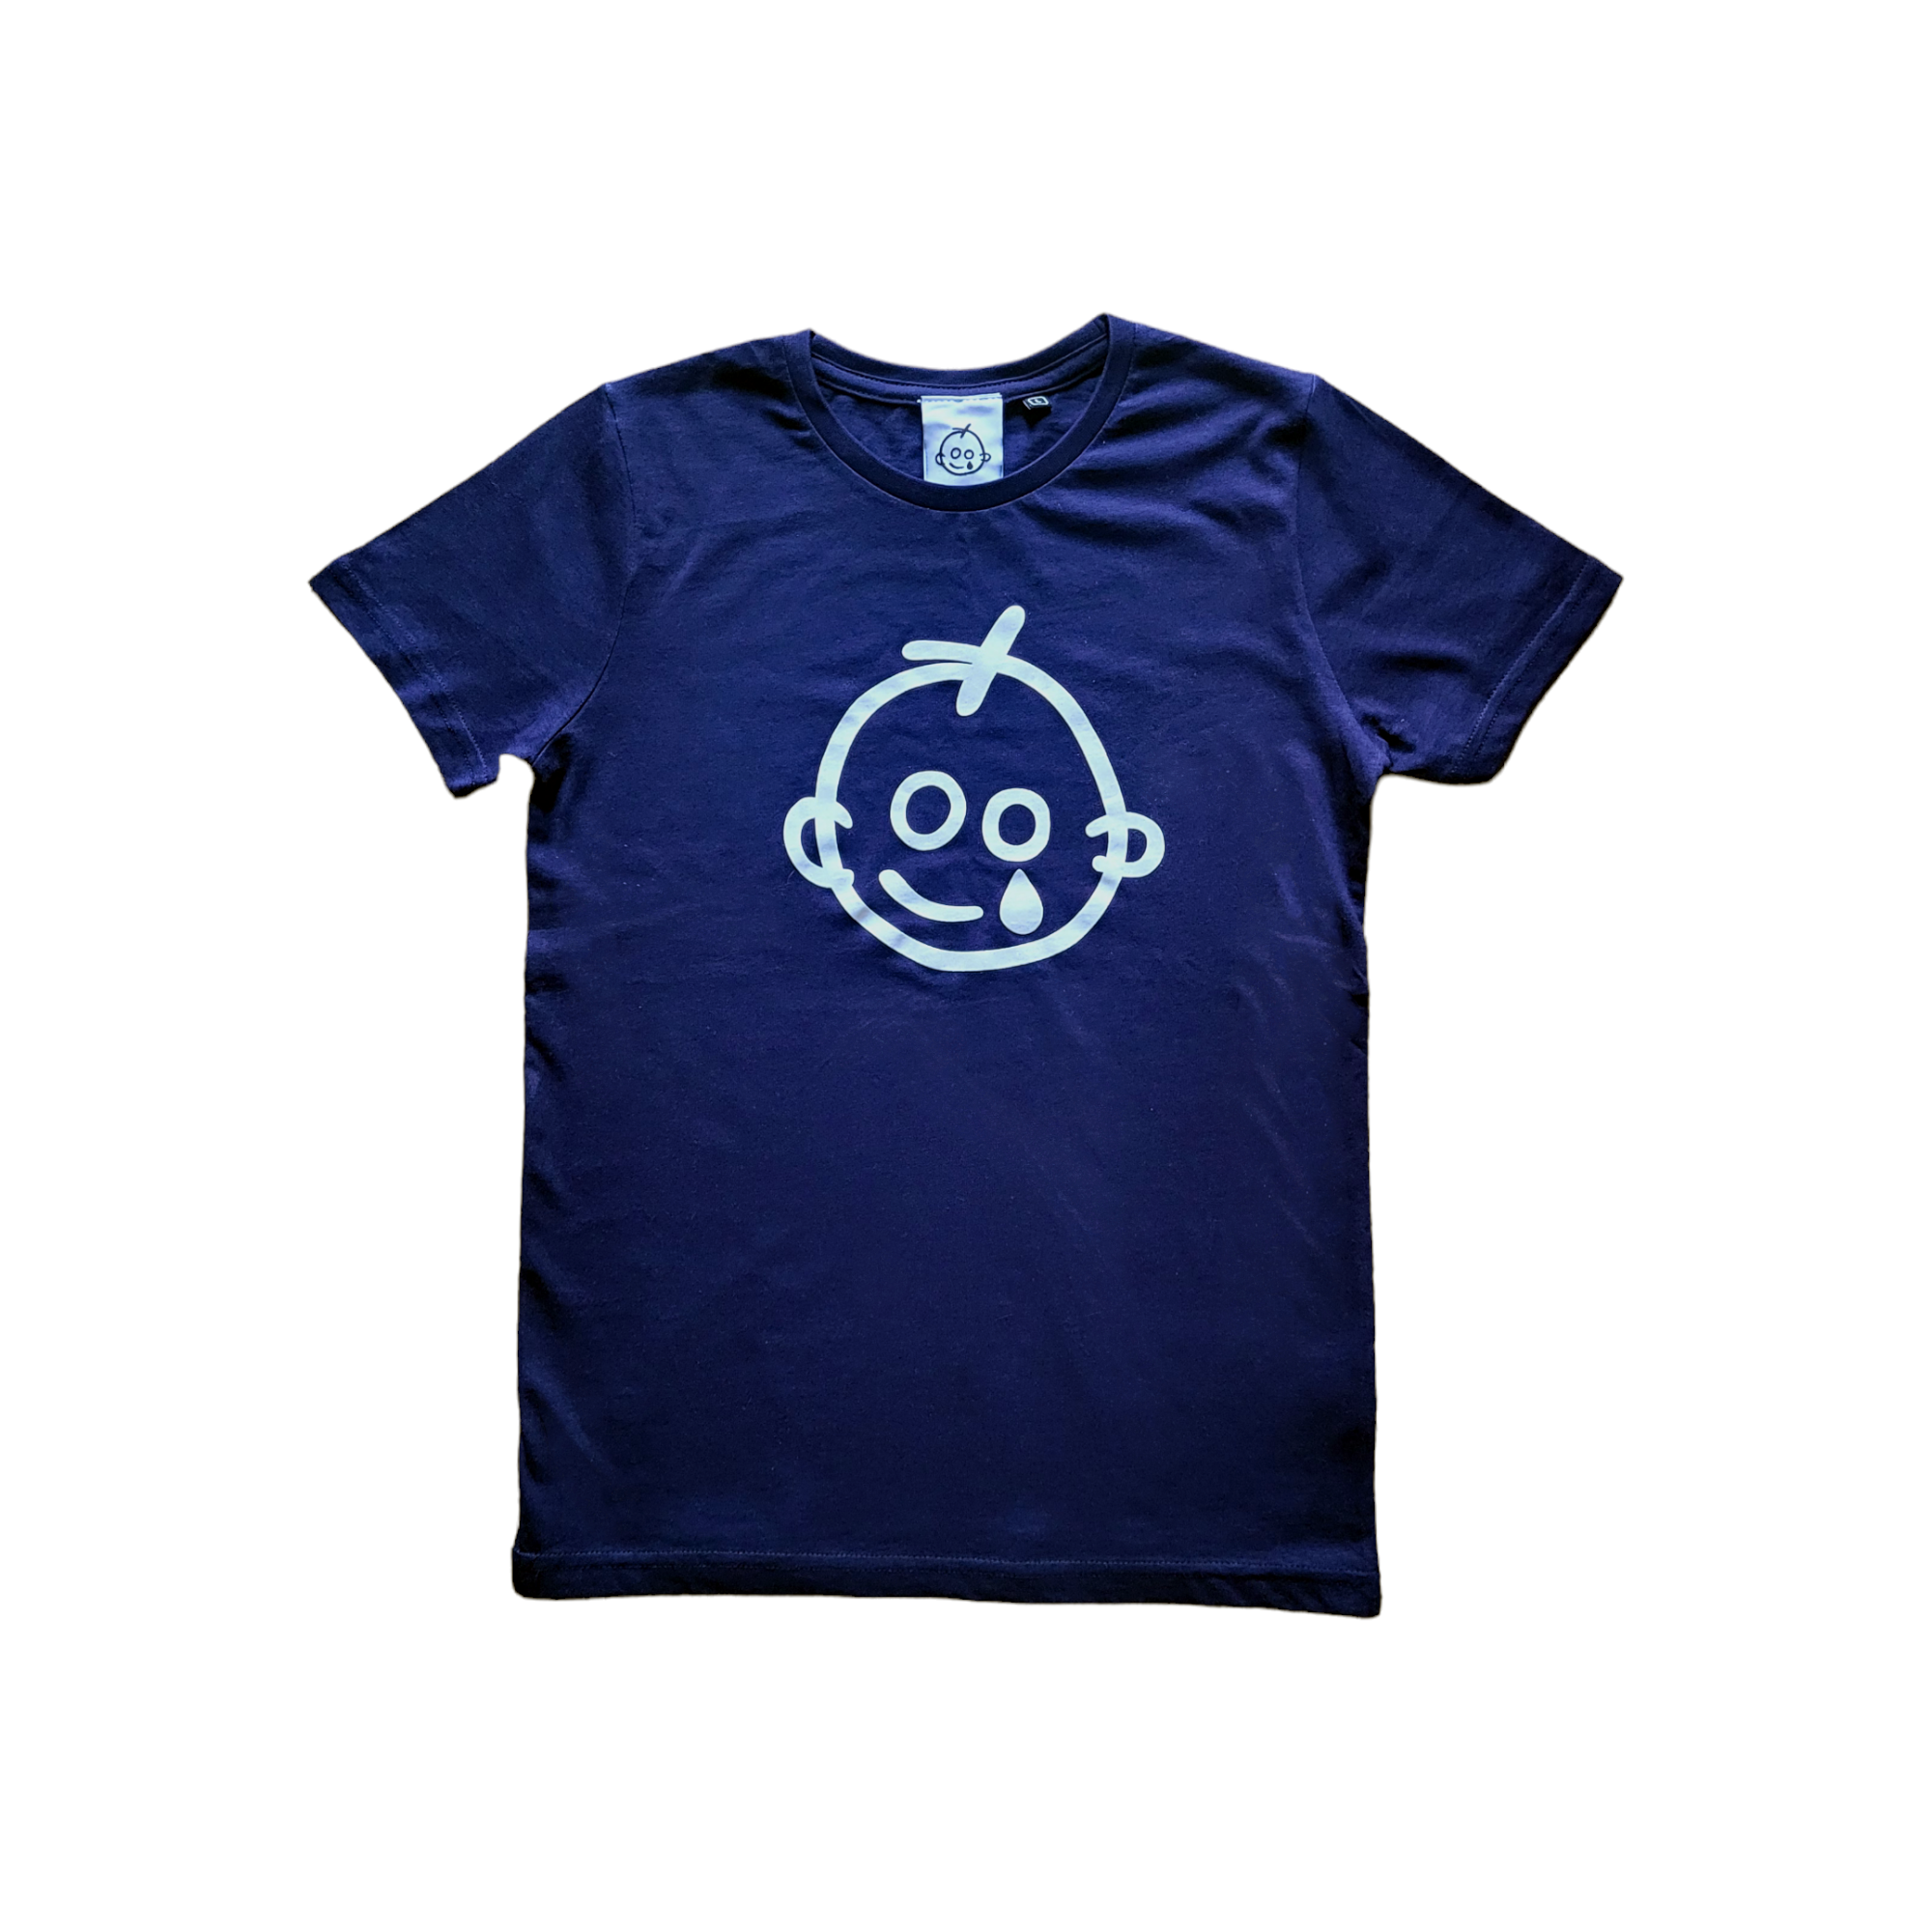 Navy GOSH Logo T-Shirt (Children's size)